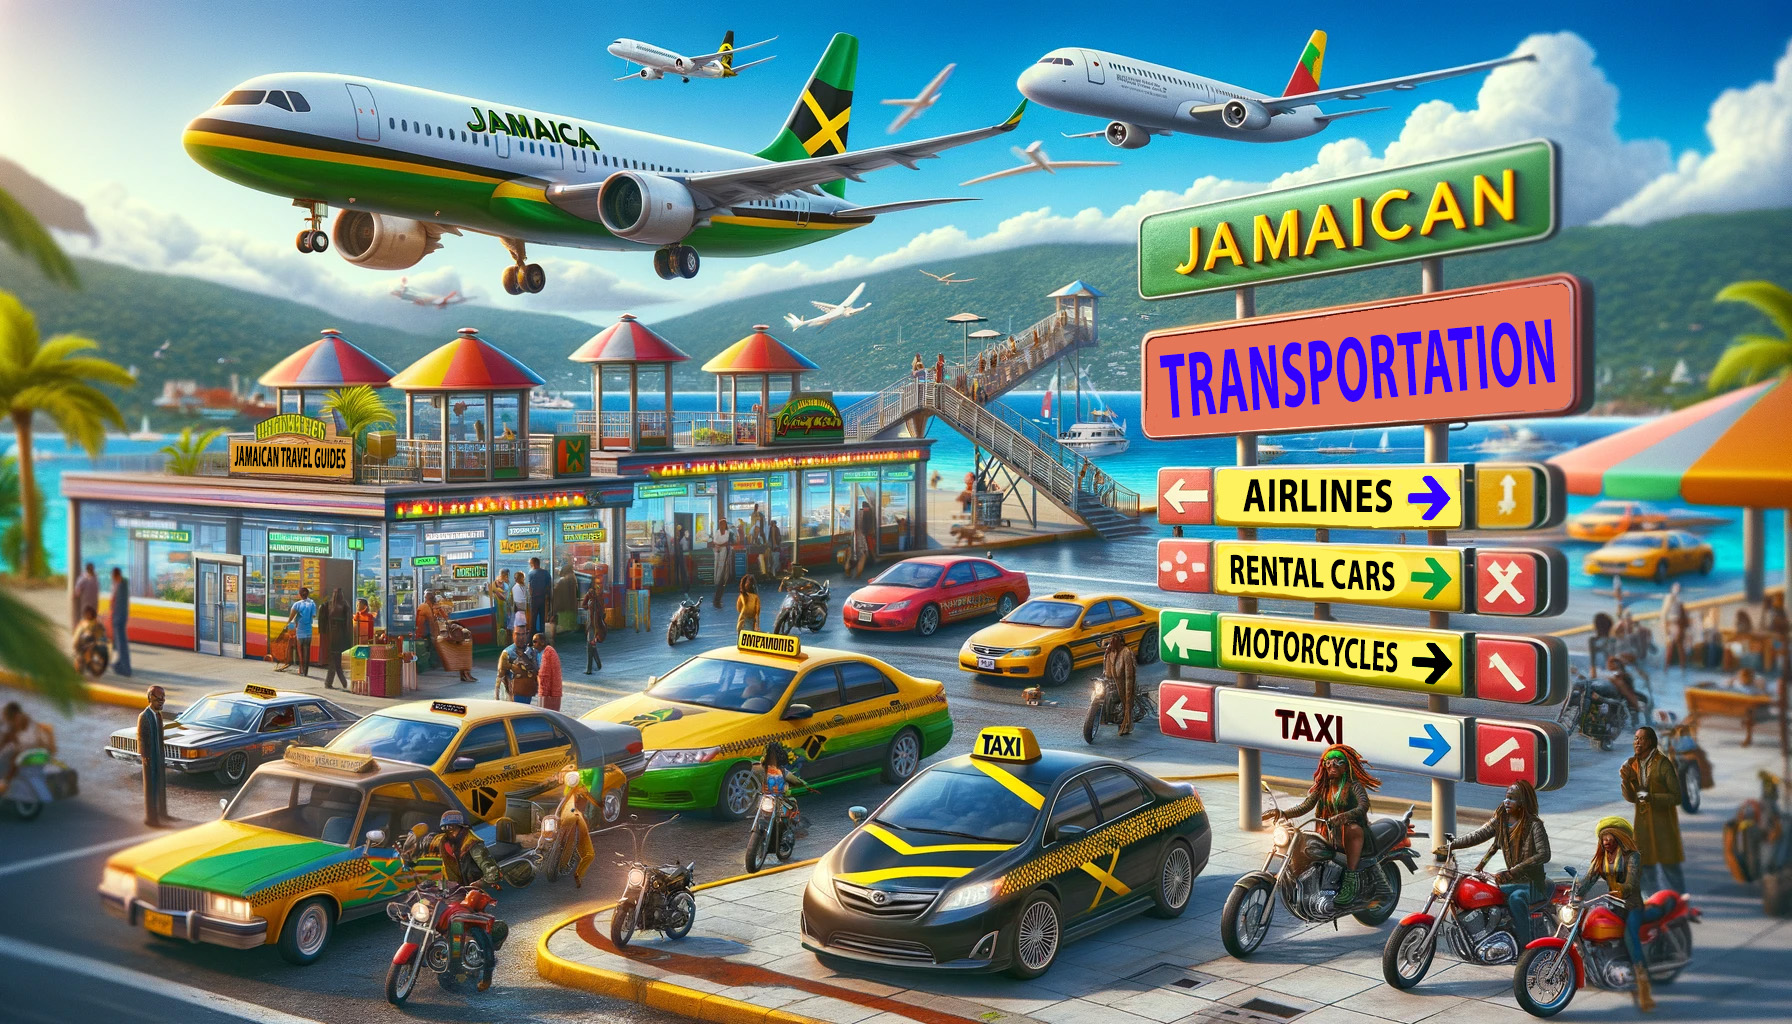 Jamaican Transportation - Jamaican Travel Guides